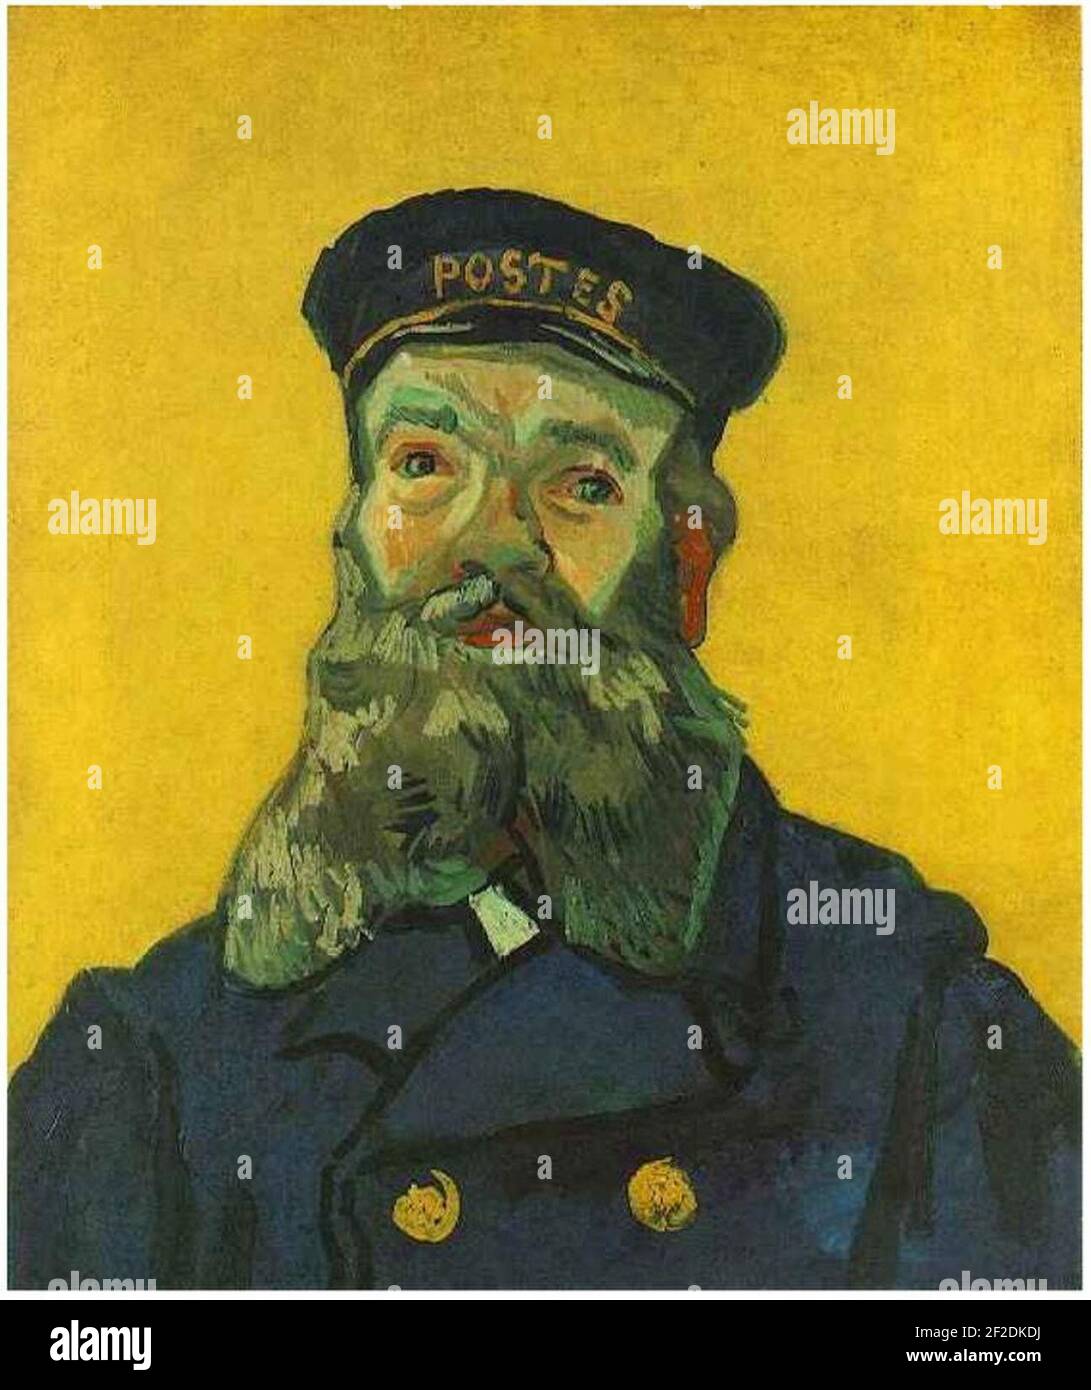 Retrato del Postman Joseph Roulin (1888) van Gogh Winterthur. Foto de stock